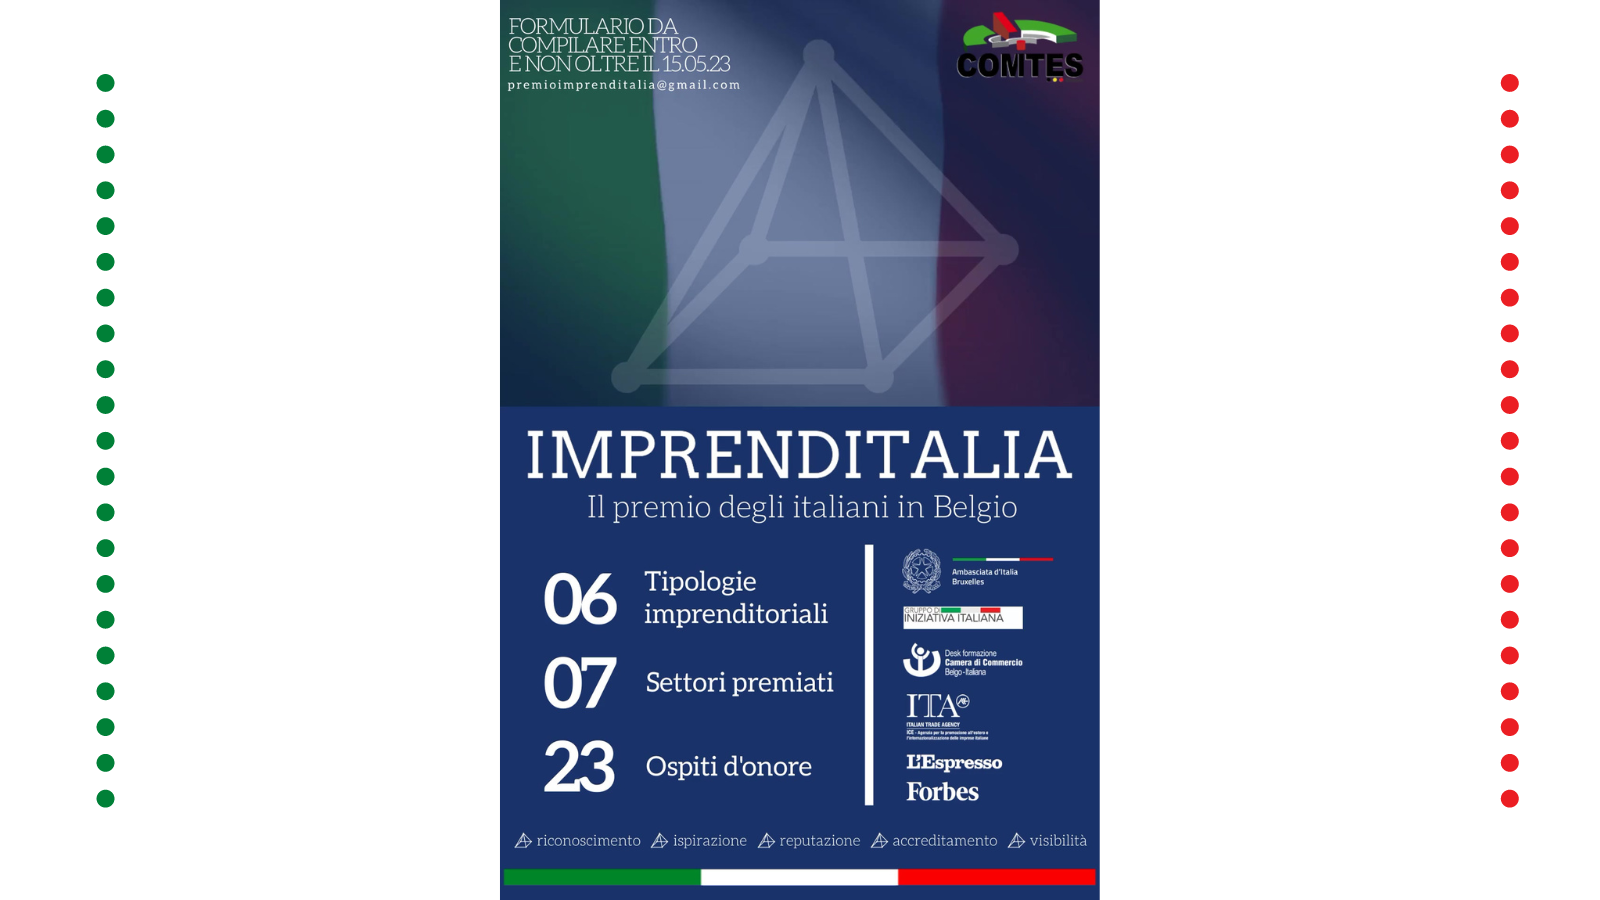 Imprenditalia – The Italian Entrepreneur Award in Belgium